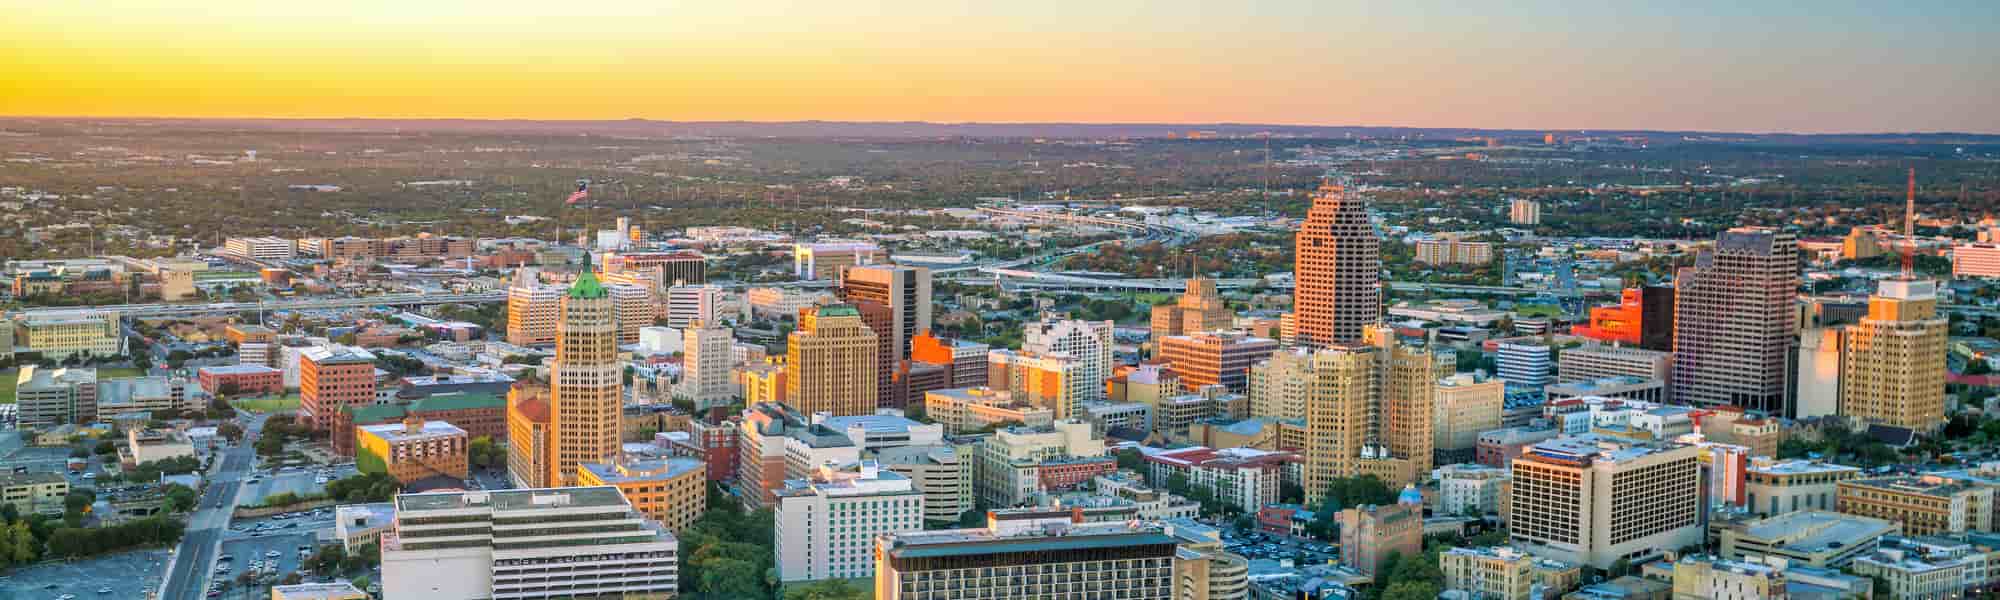 San Antonio Housing Market Prices, Trends & Forecasts 2022